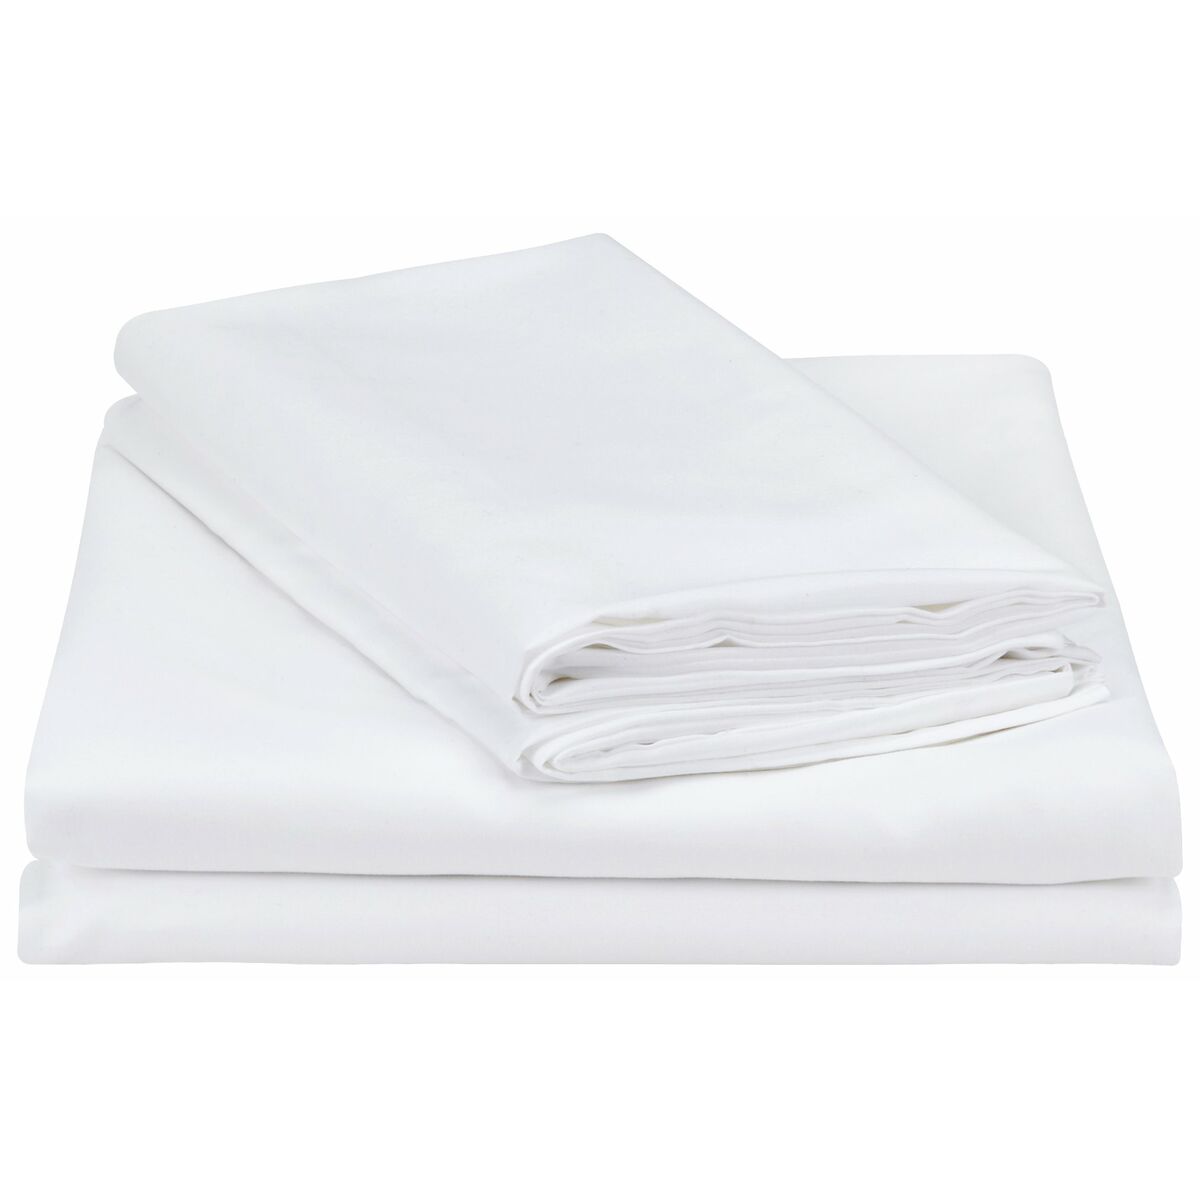 Pillowcase Amazon Basics 65 x 65 cm (Refurbished Products A)